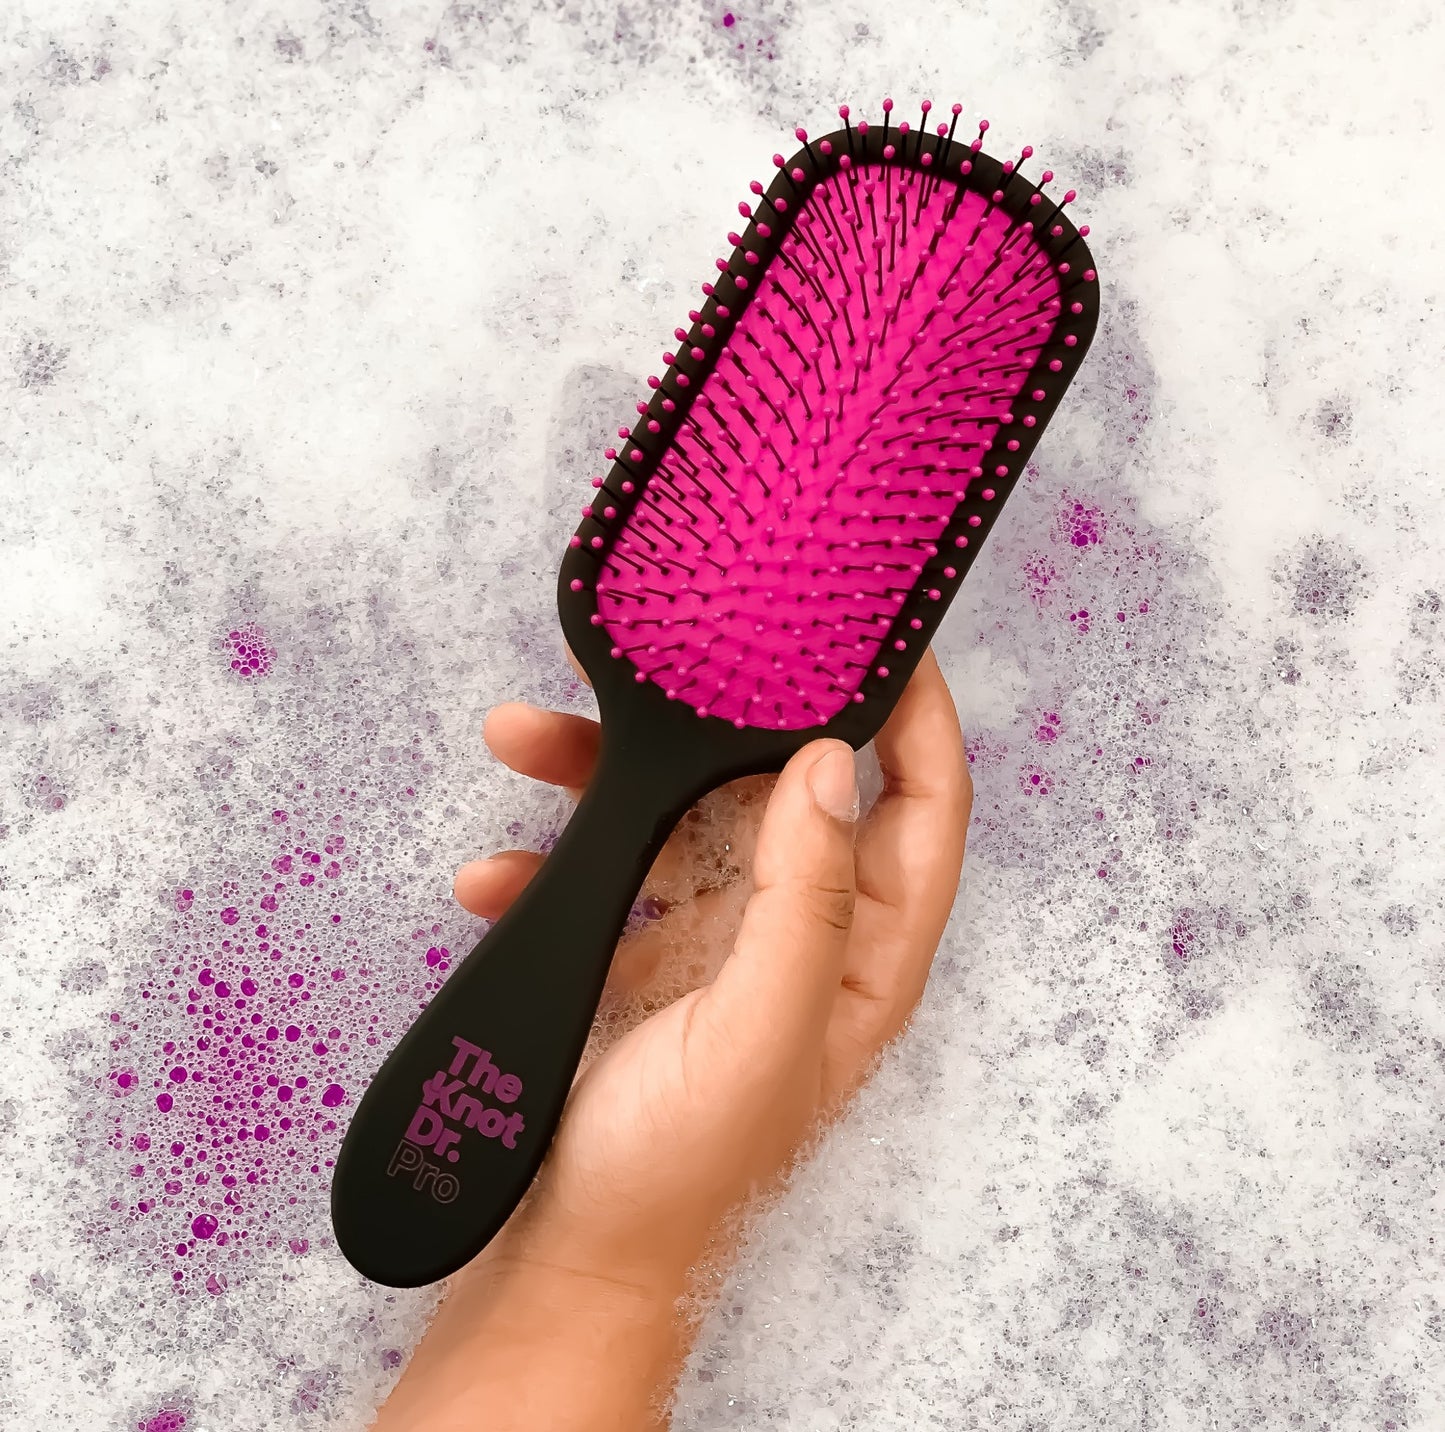 The Pink Pro Hairbrush